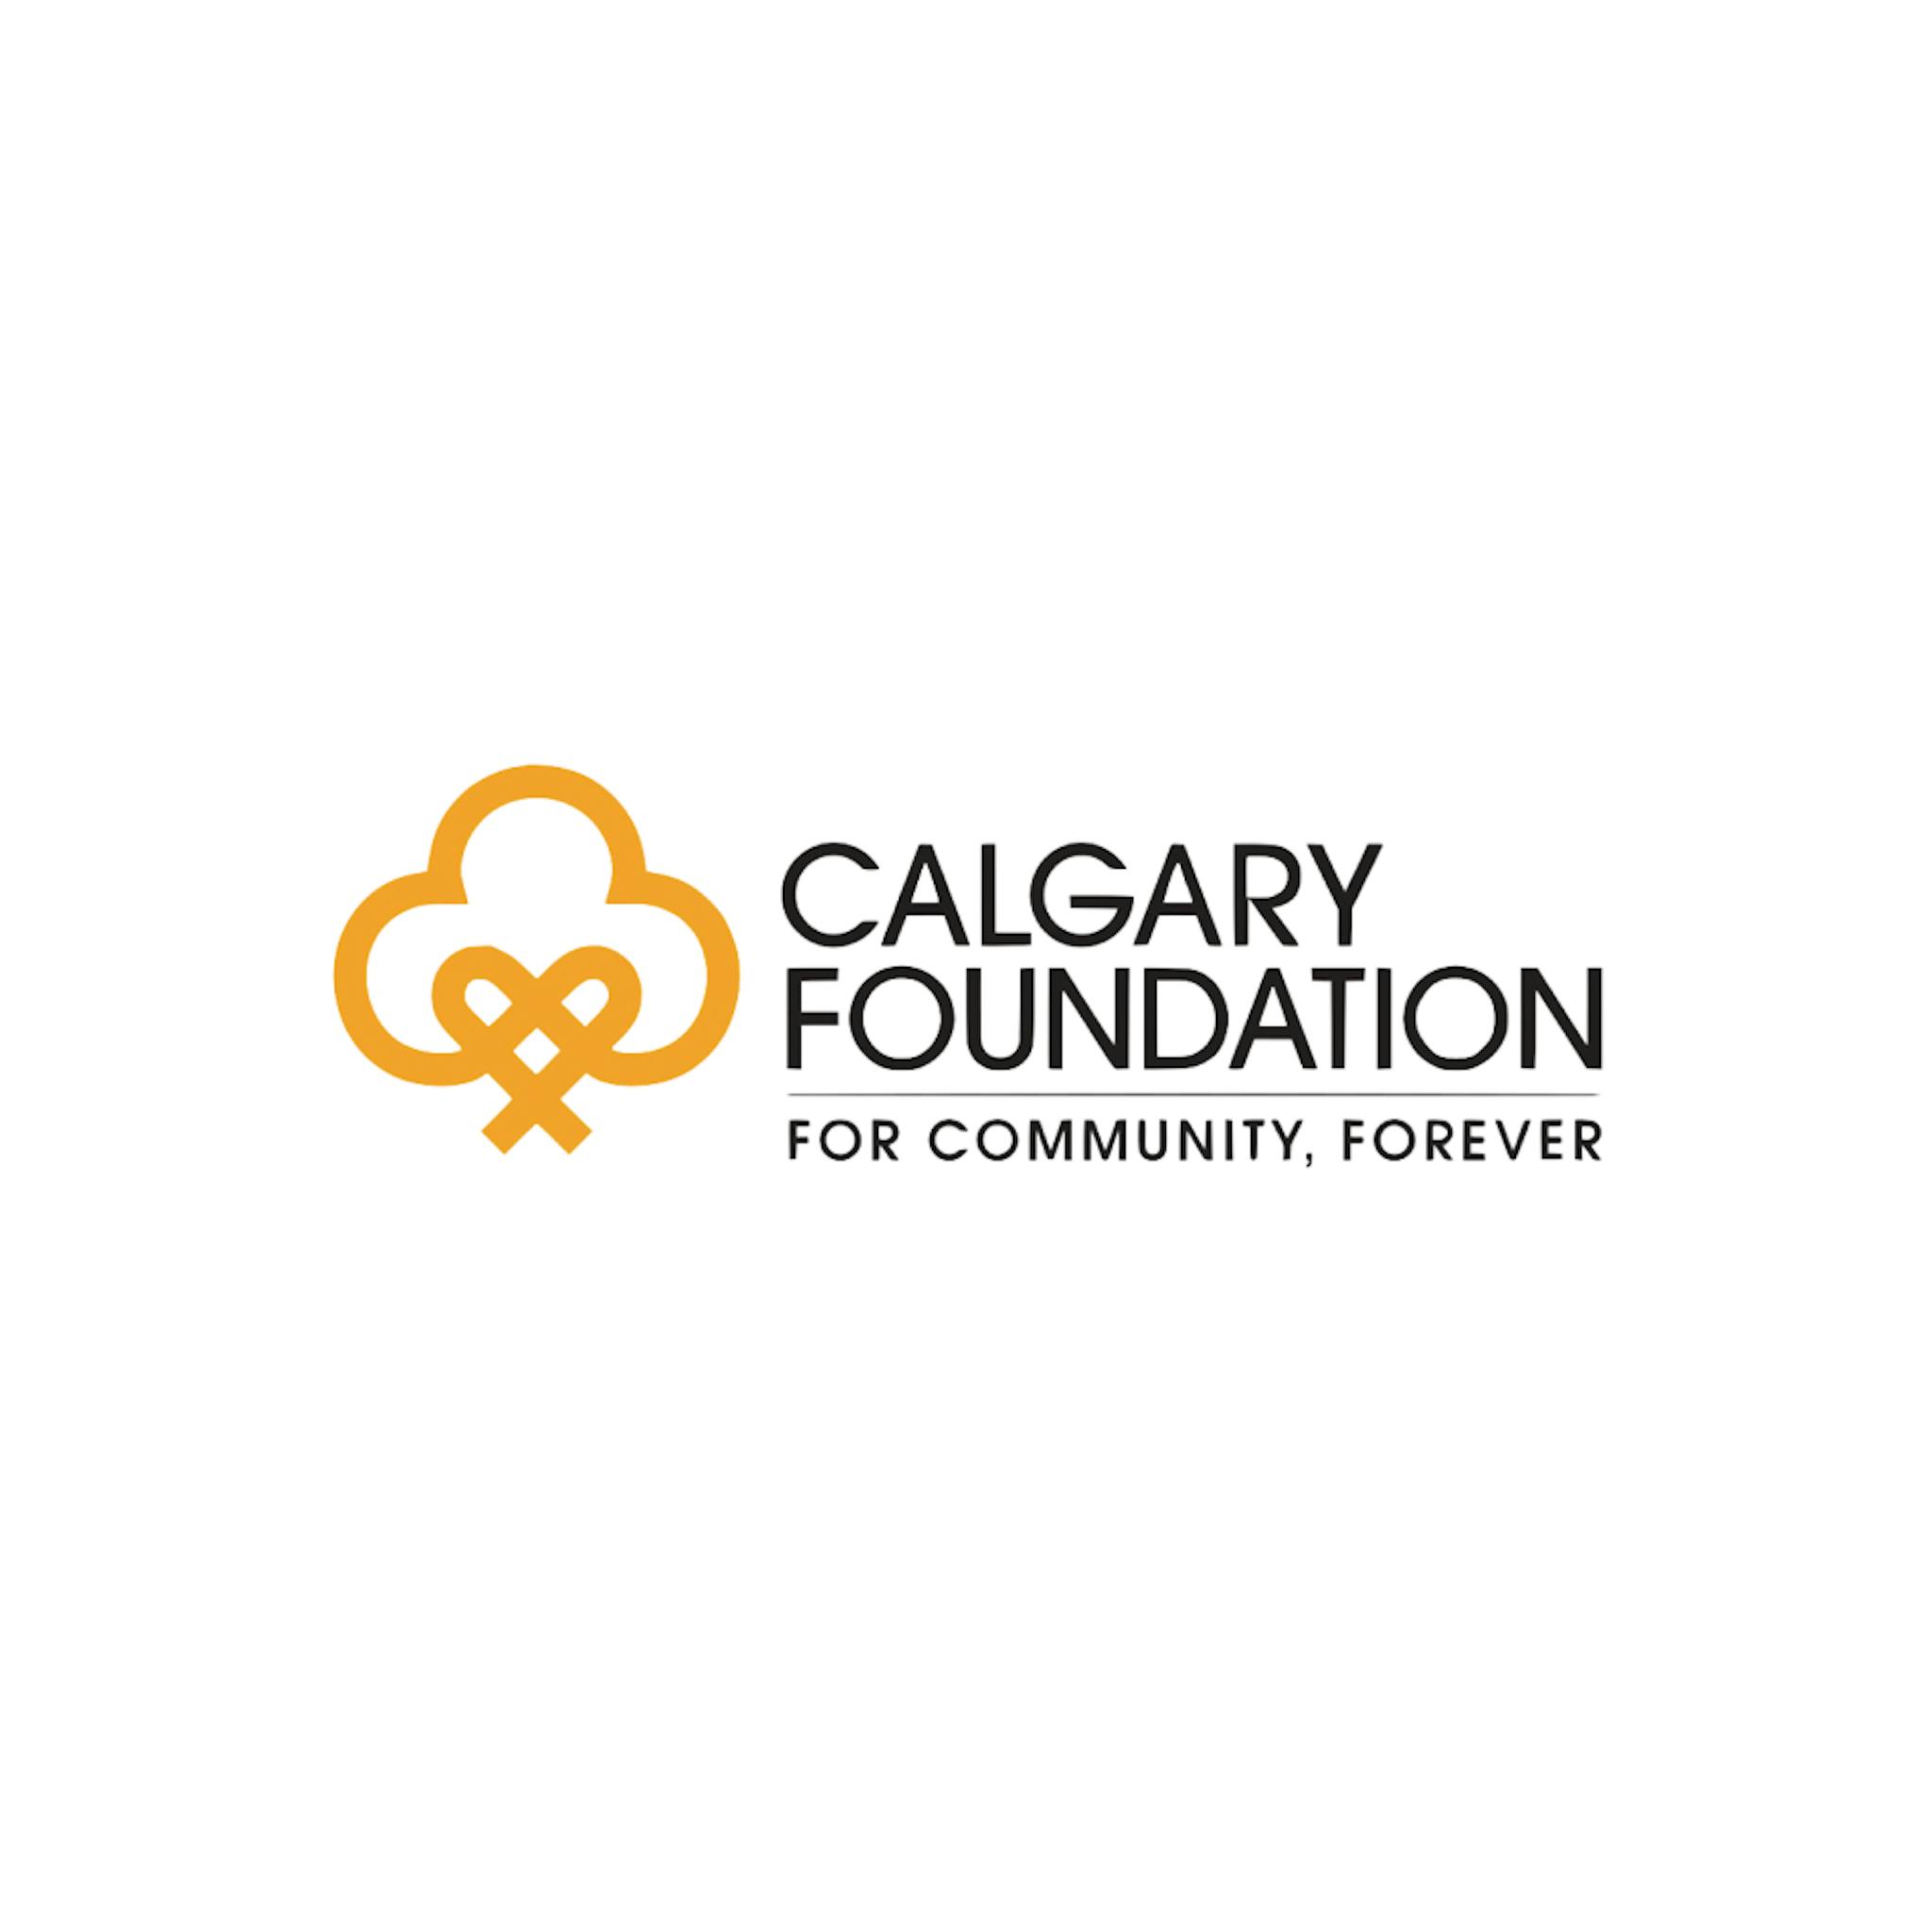 Calgary Foundation for Community Forever logo